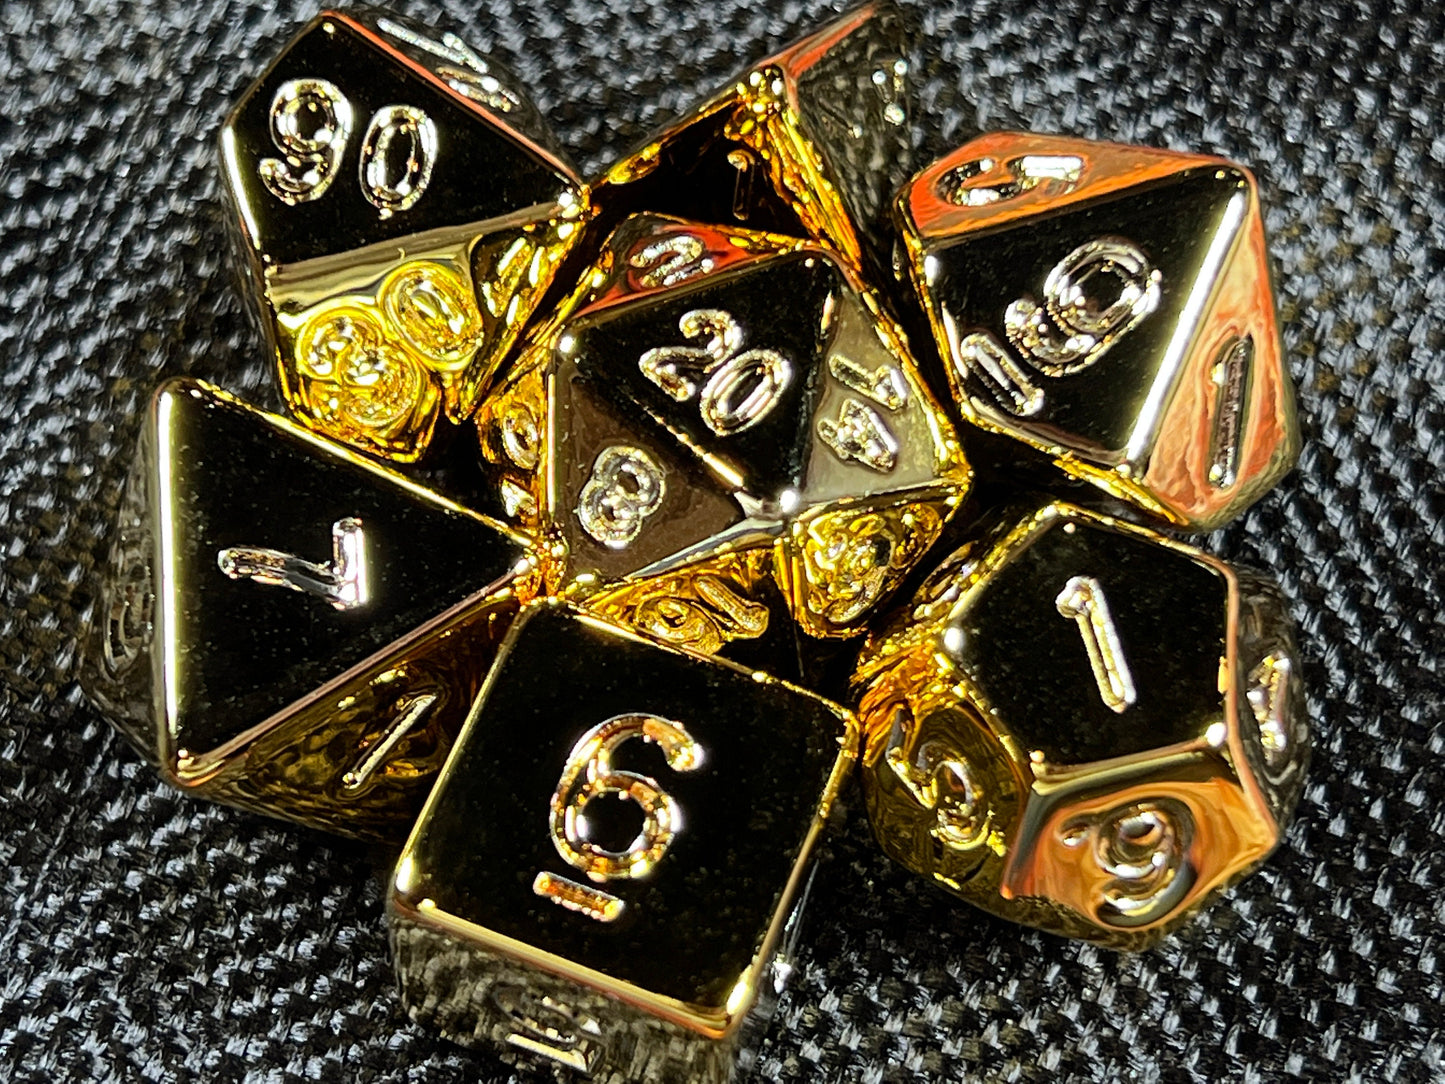 FREE Today: Gold Chrome DnD Dice Set (Give away a random dice set)